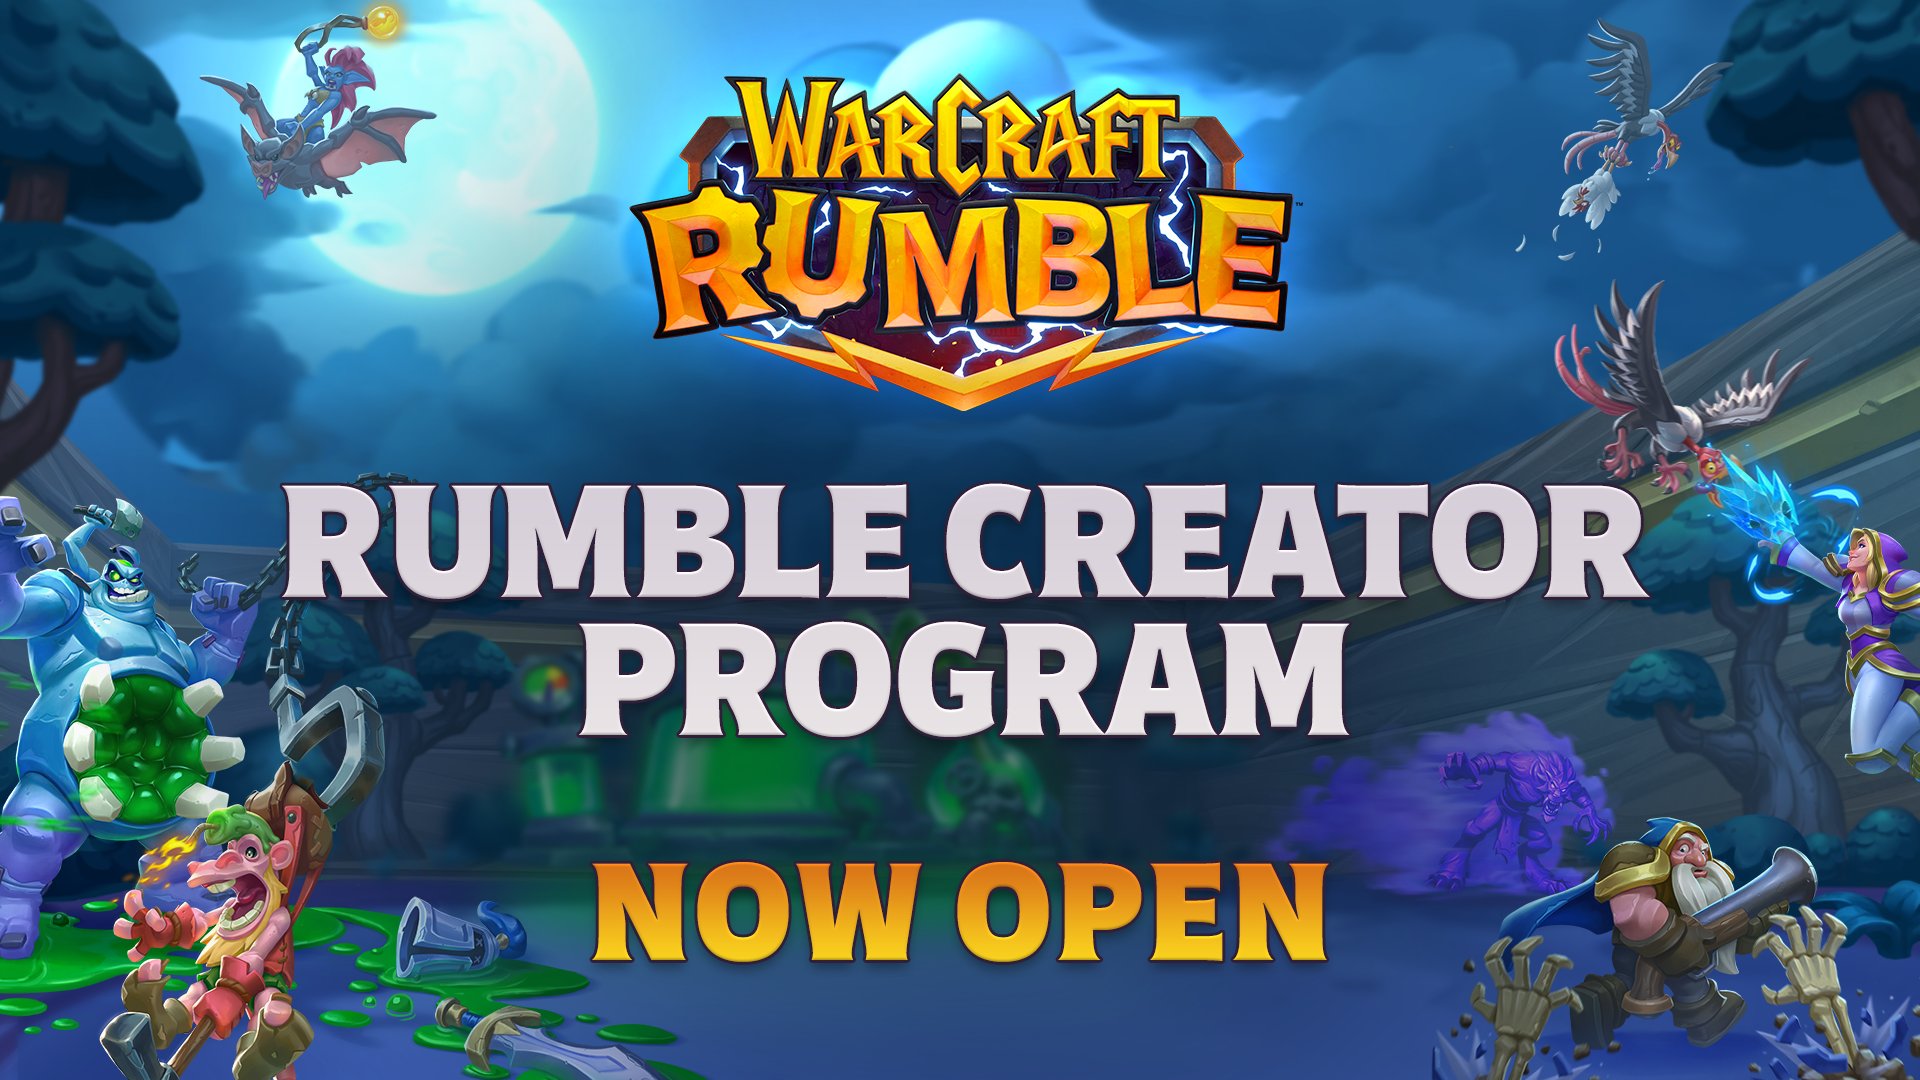 A reserva de Warcraft Rumble na Apple App Store já está disponível! —  Warcraft Rumble — Notícias da Blizzard